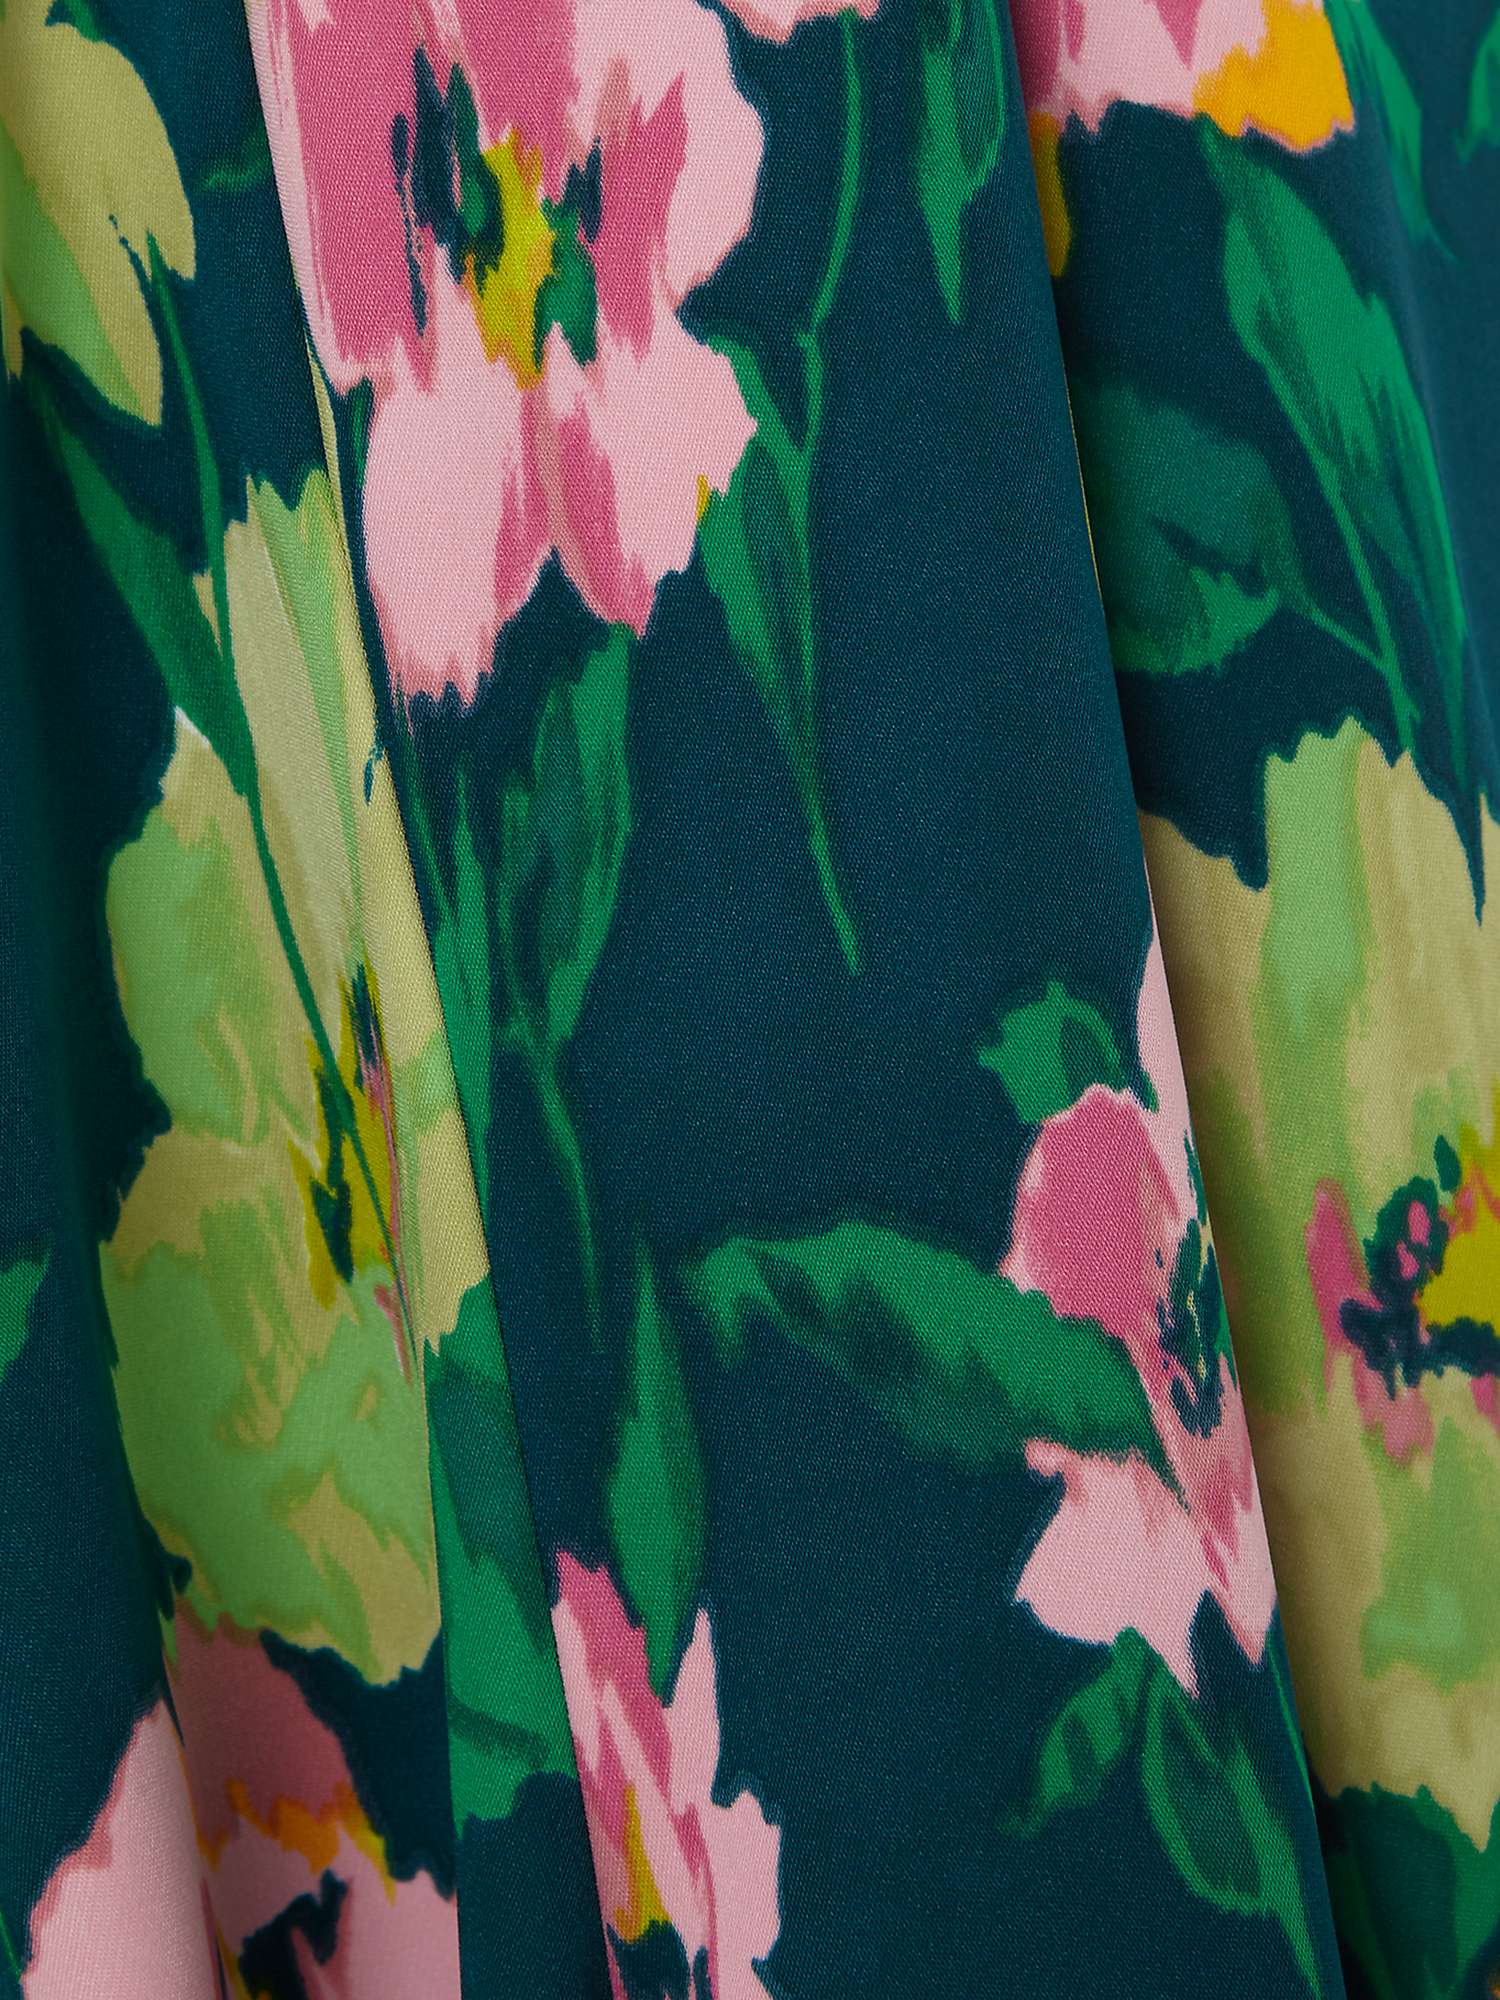 Buy Phase Eight Effie Floral Jumpsuit, Teal/Multi Online at johnlewis.com